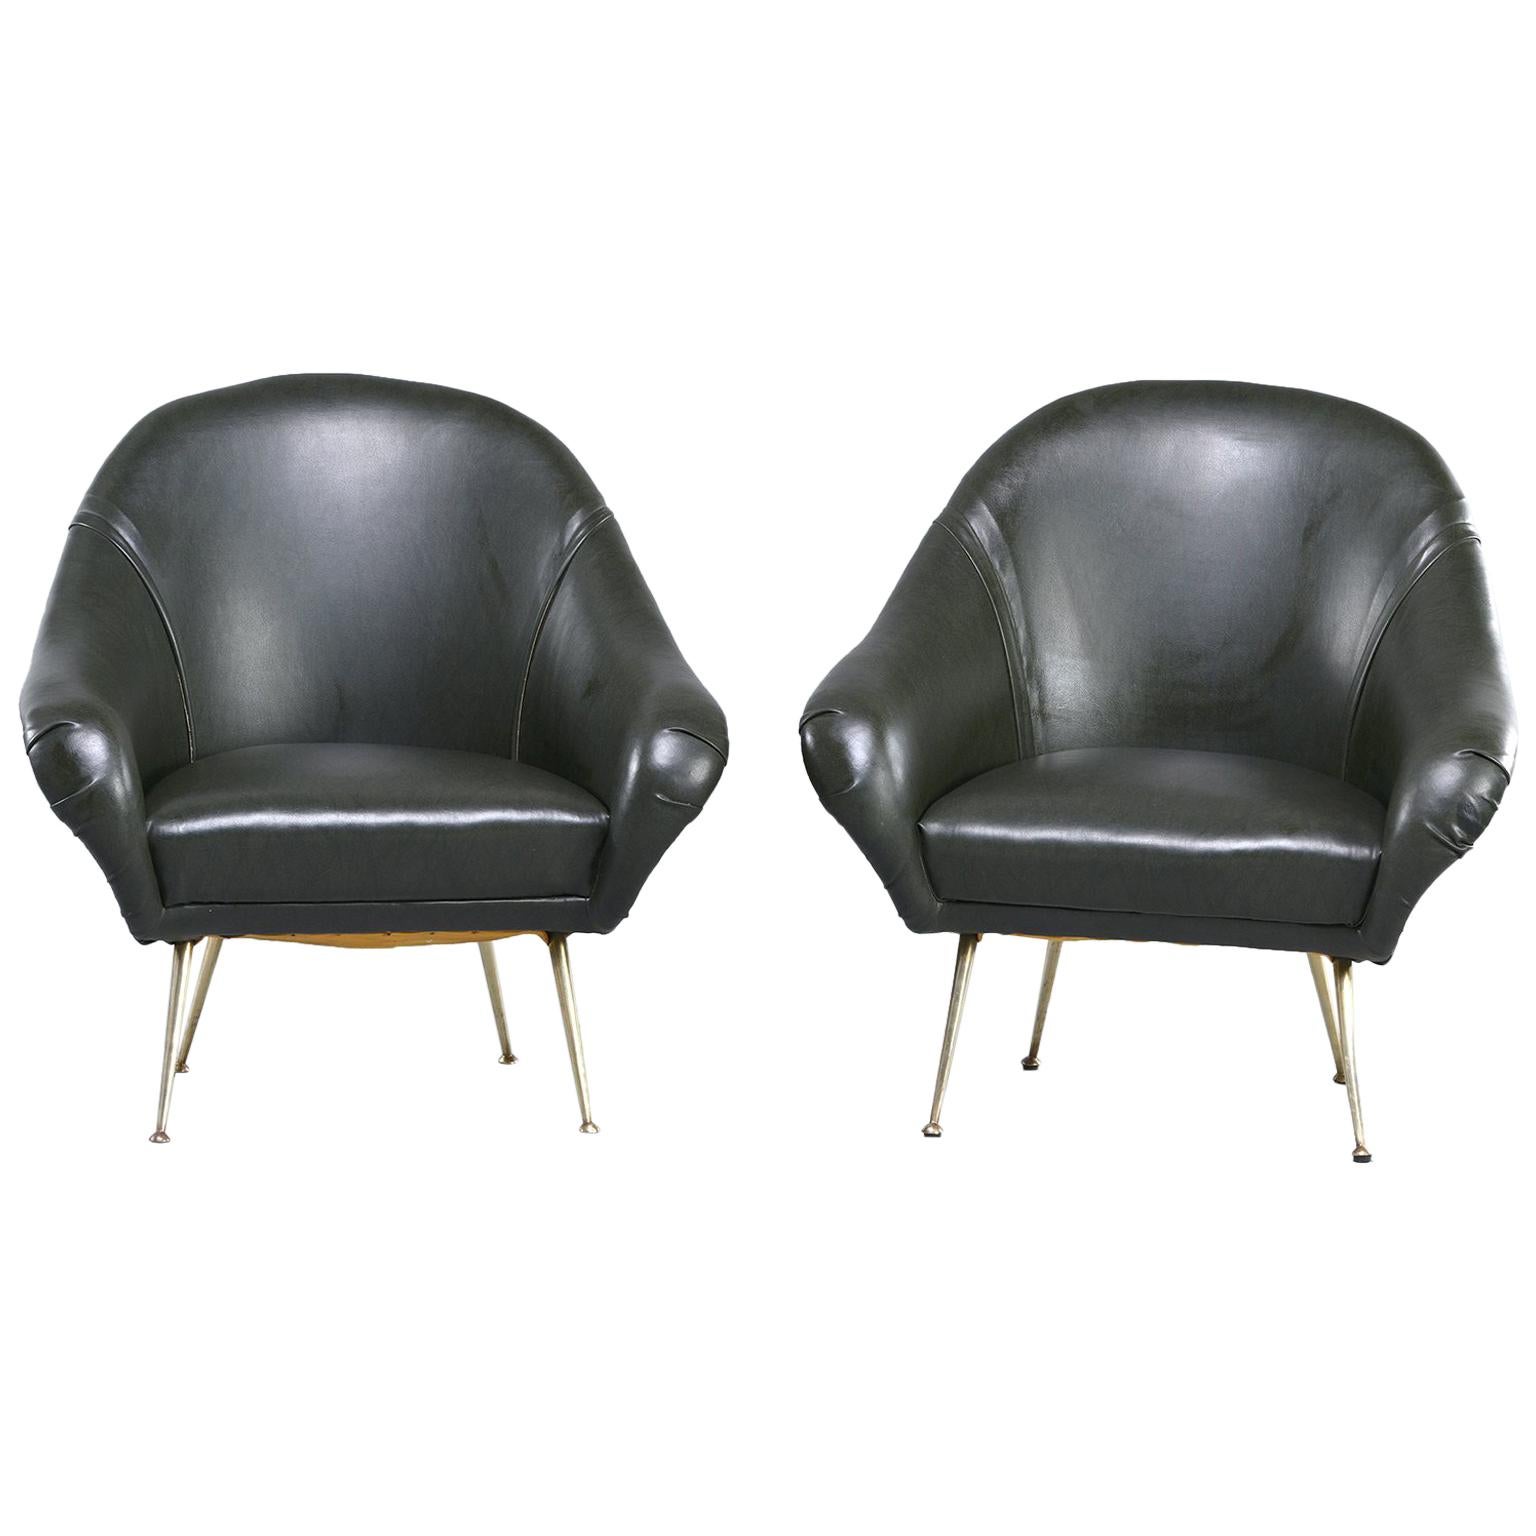 Pair Italian Midcentury Lounge Chairs in Manner of Minotti